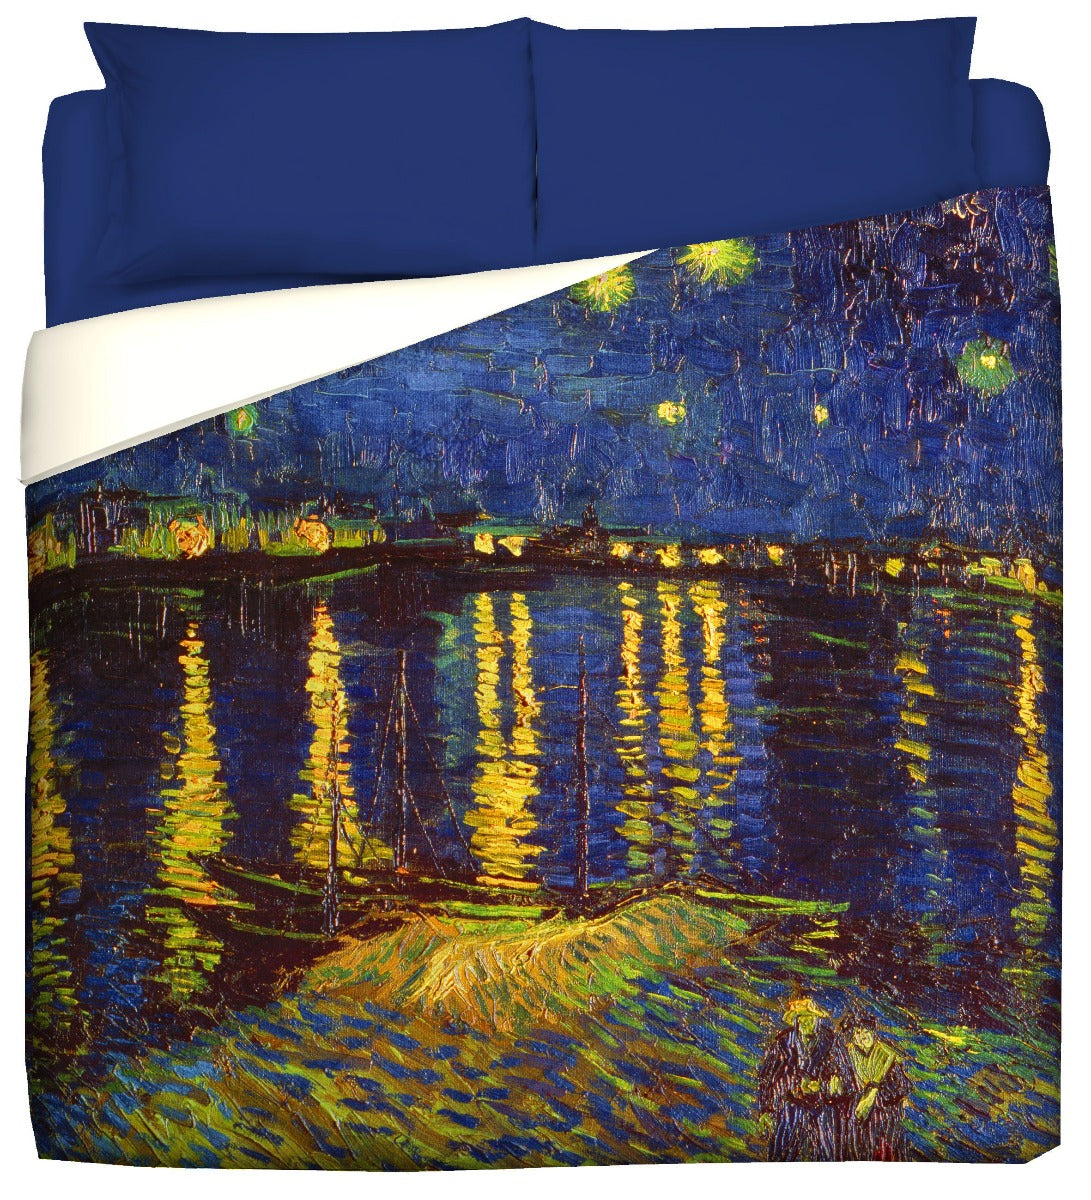 Winter Quilt - Van Gogh-Starry Night over the Rhone